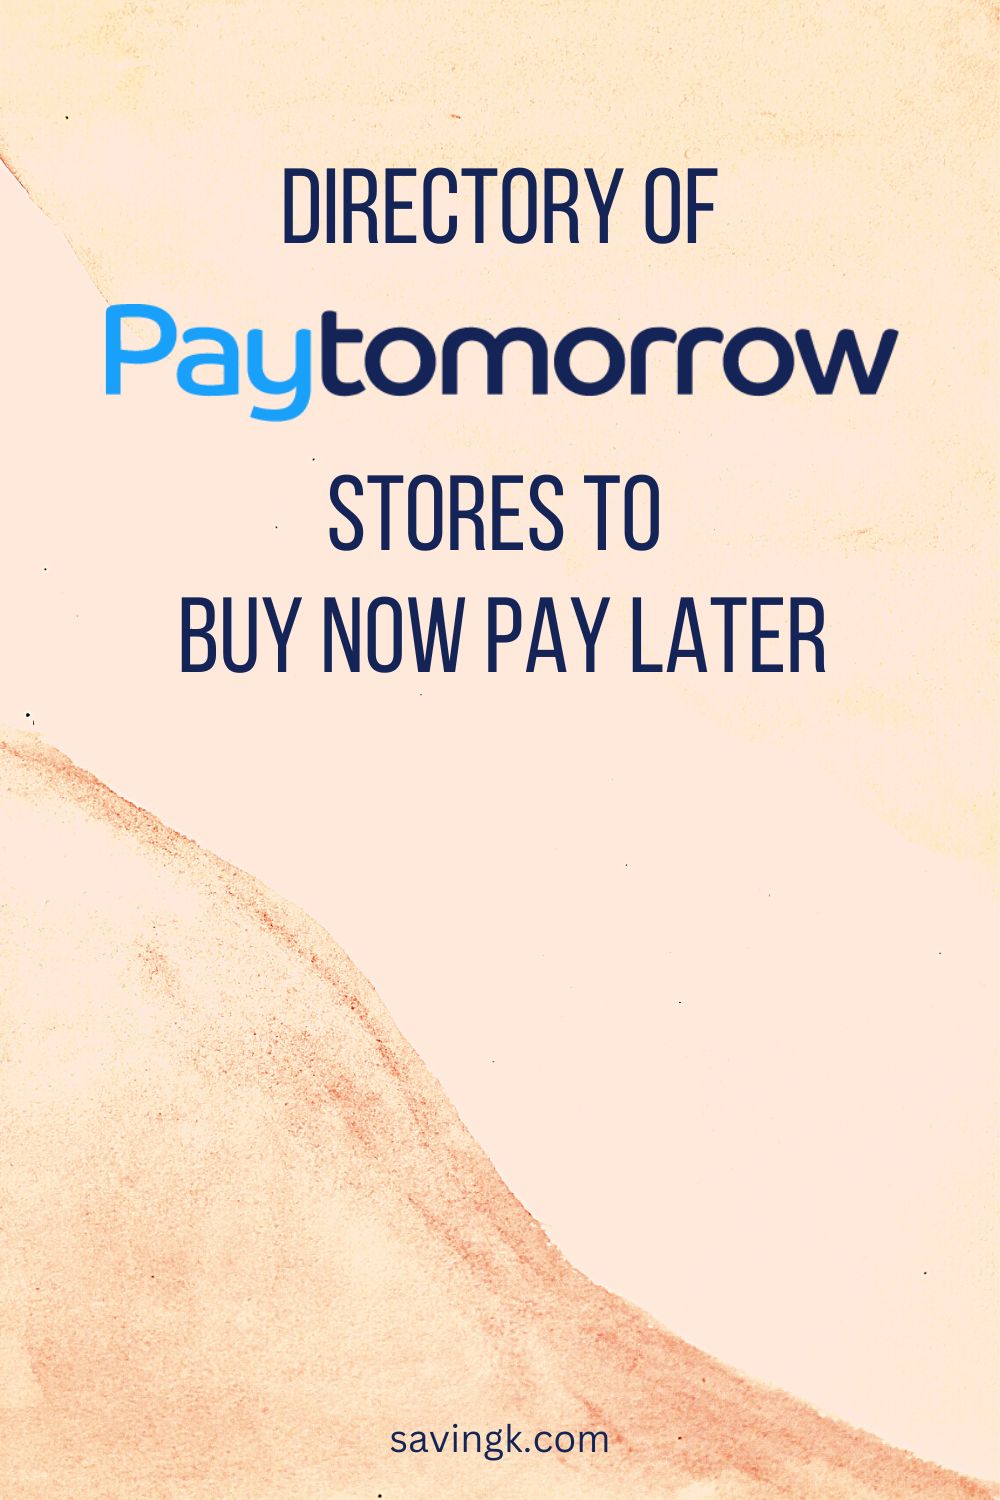 List of Paytomorrow Stores